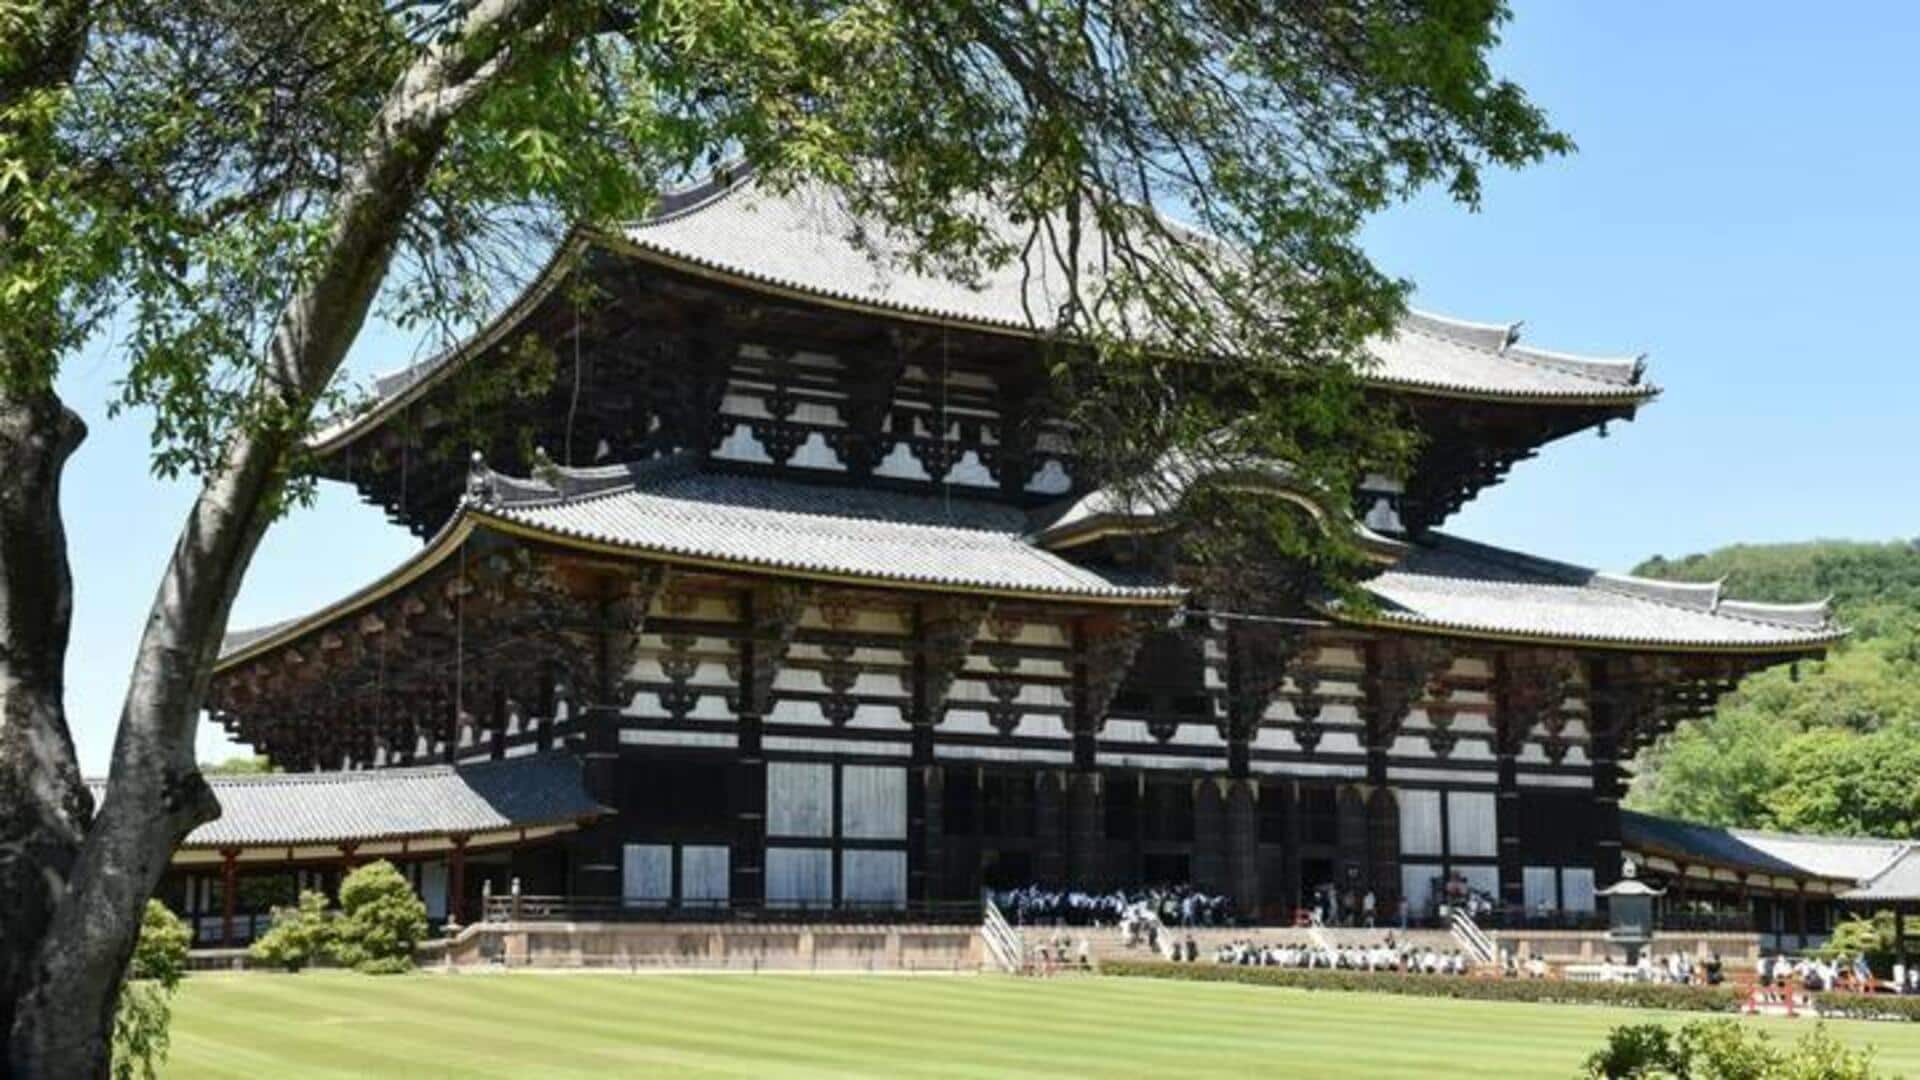 Rasakan Ketenangan Di Nara, Jepang Dengan Panduan Wisata Berikut Ini